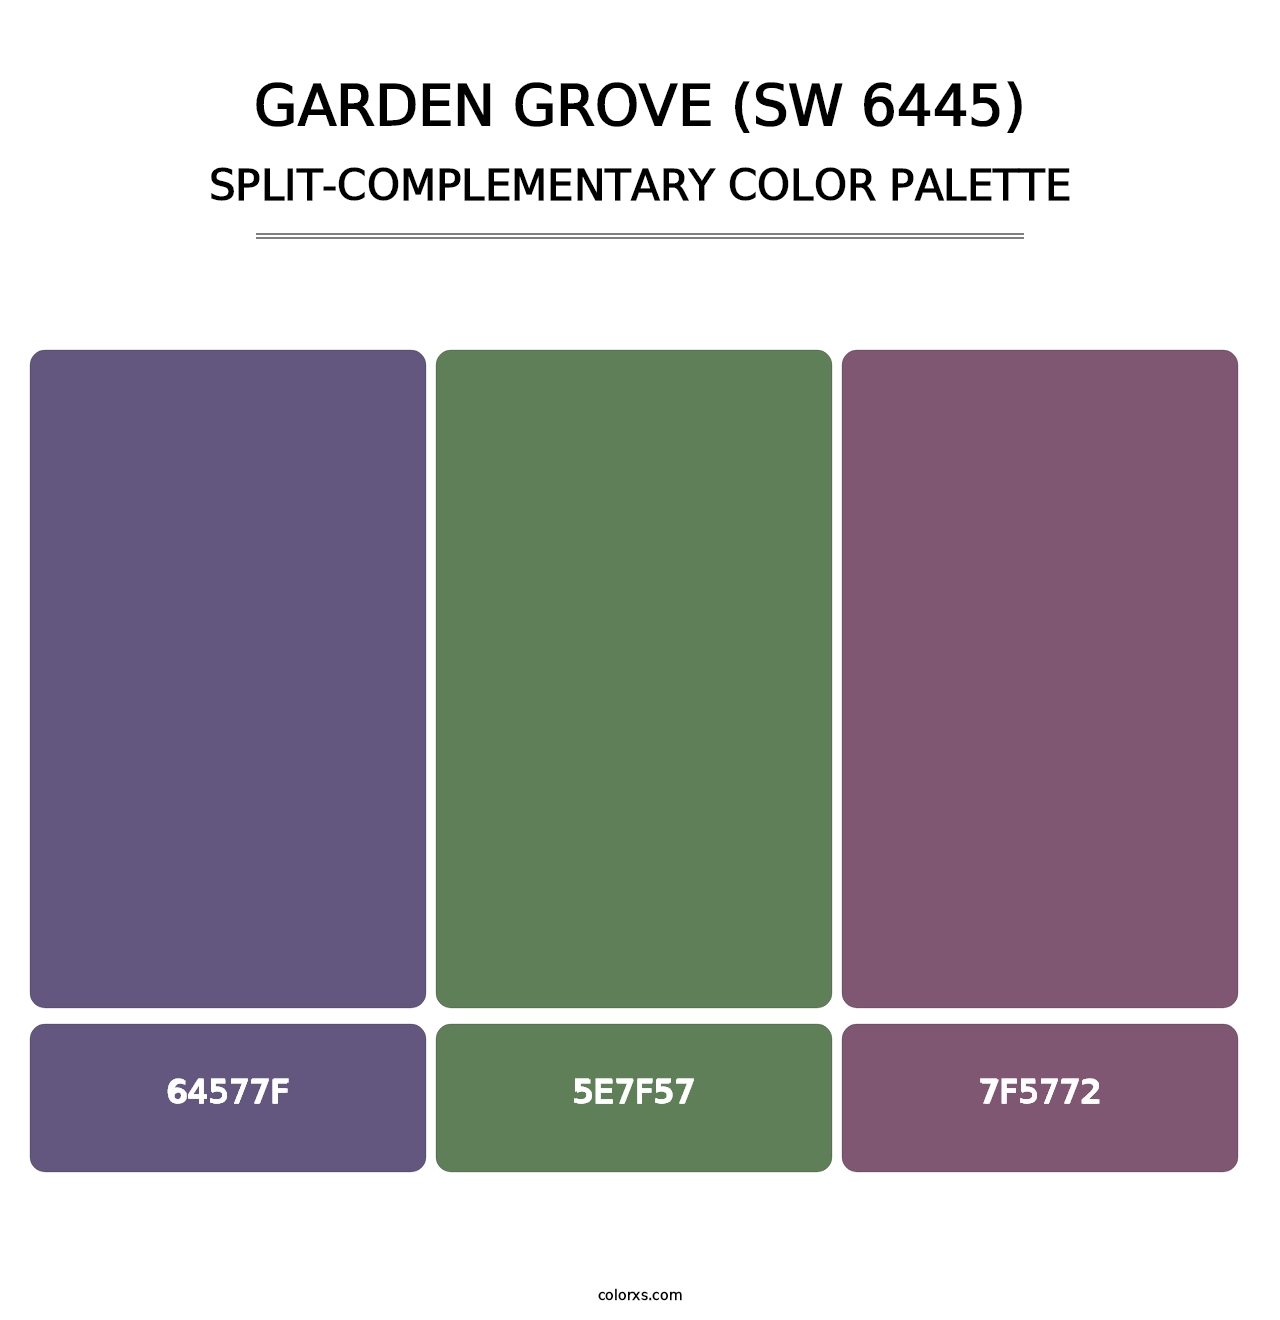 Garden Grove (SW 6445) - Split-Complementary Color Palette